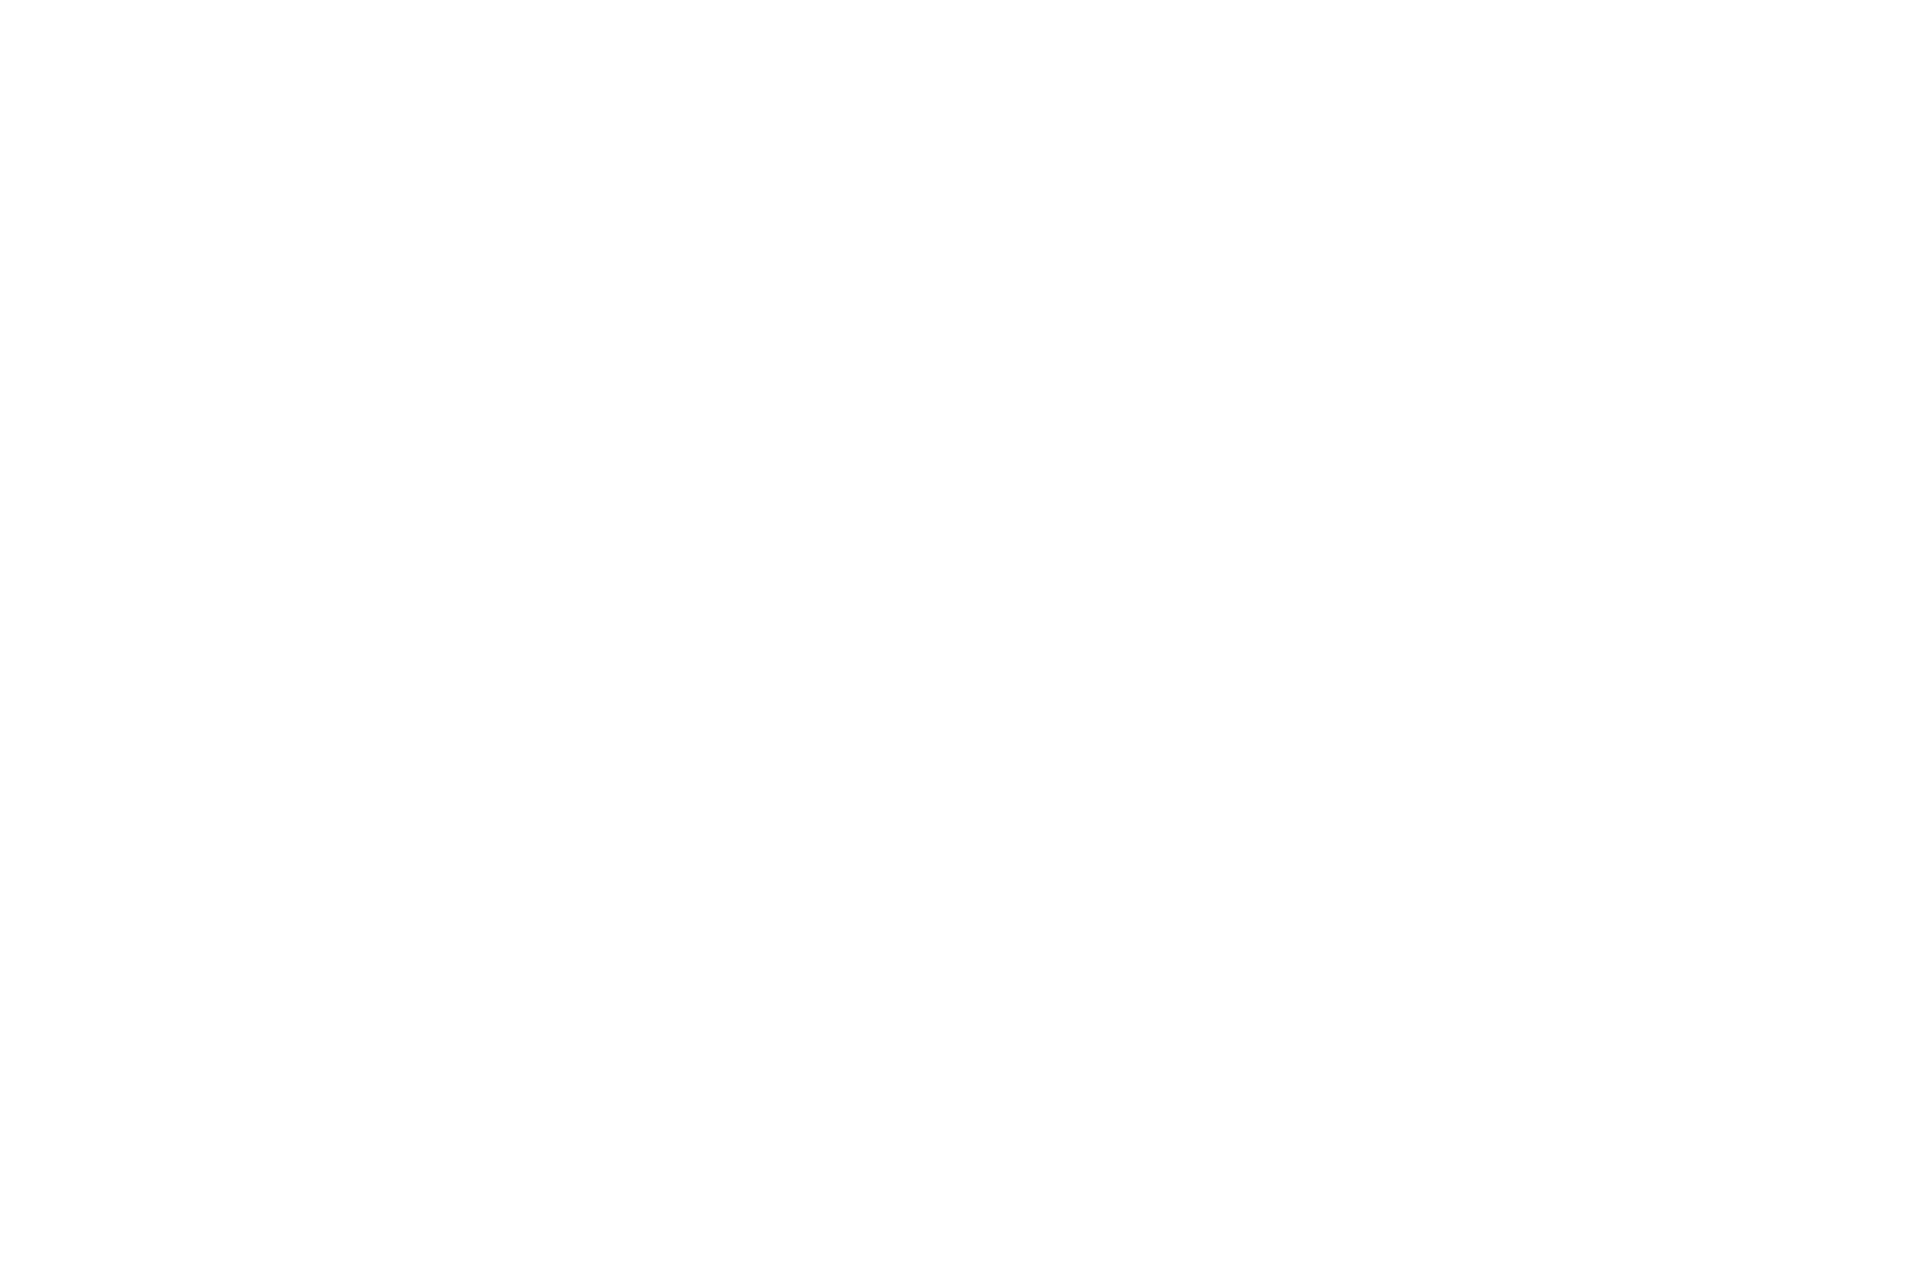 Tetrahydrocannabidiol